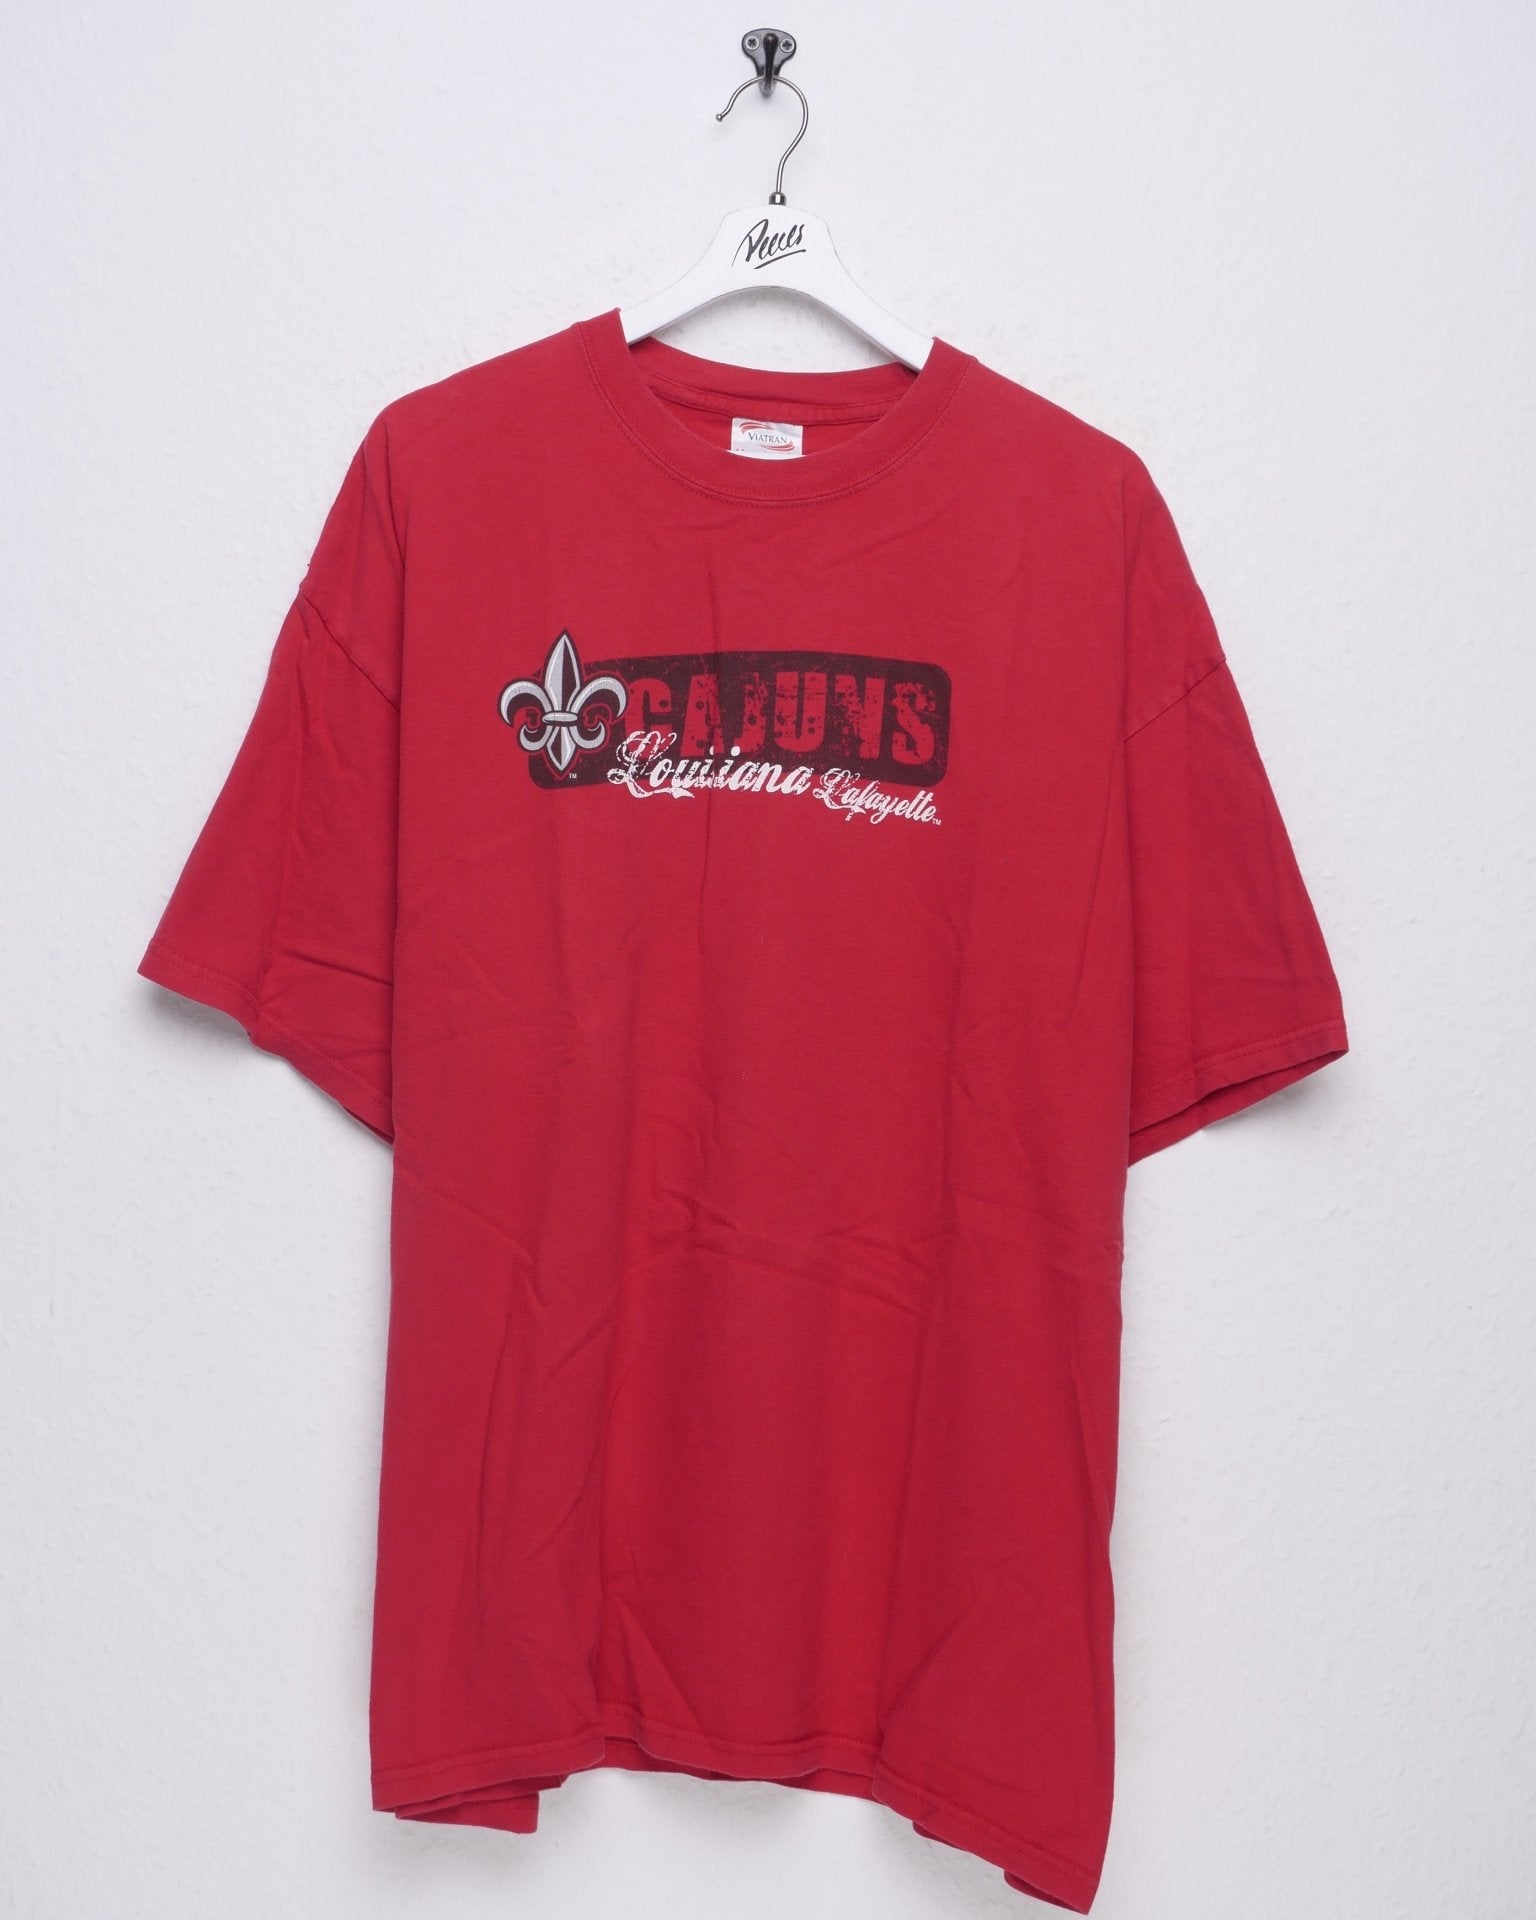 Louisiana printed Spellout Vintage Shirt - Peeces